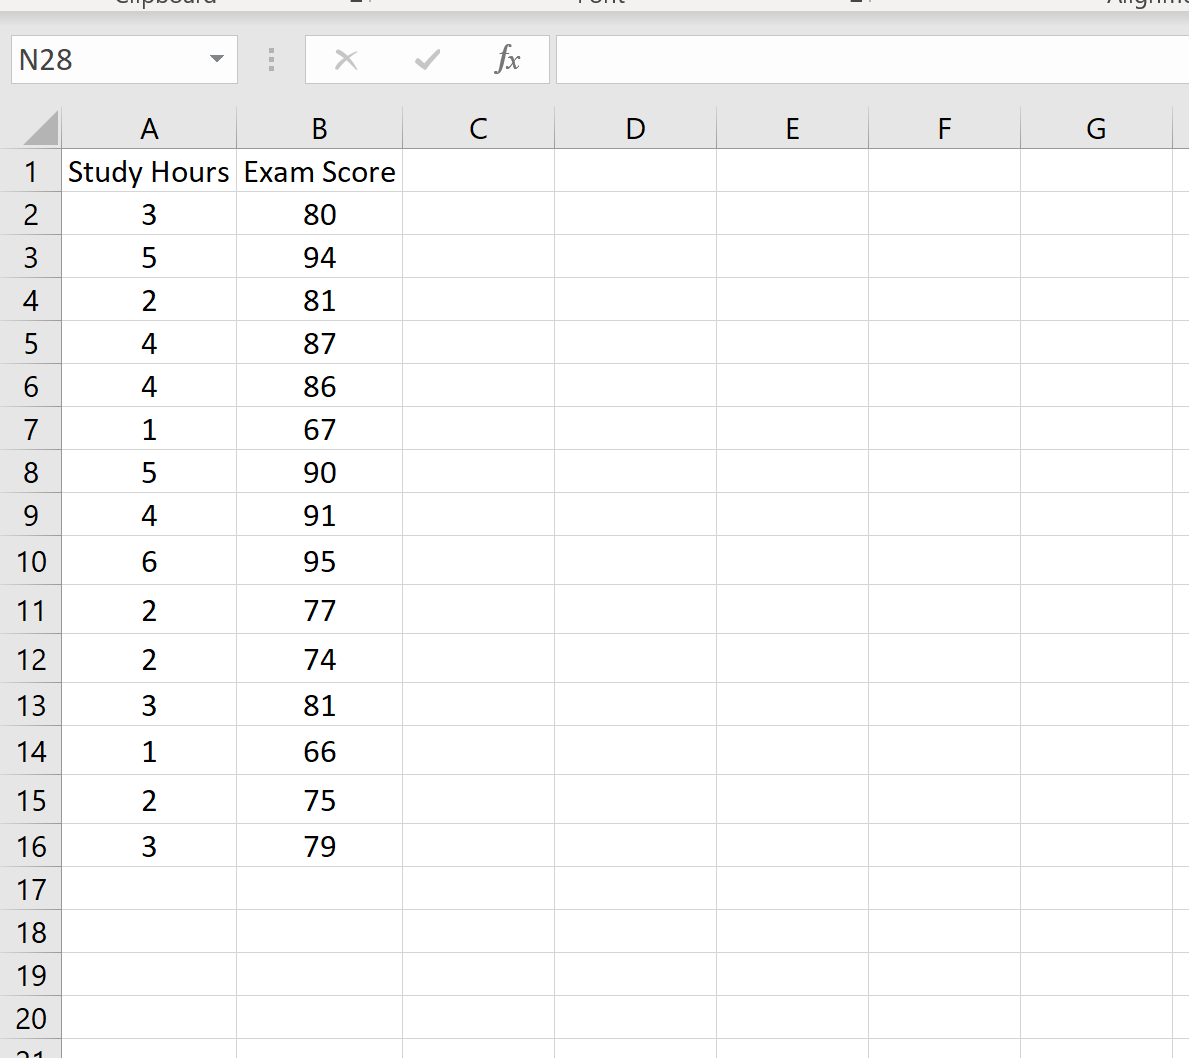 Contoh Kumpulan Data di Excel